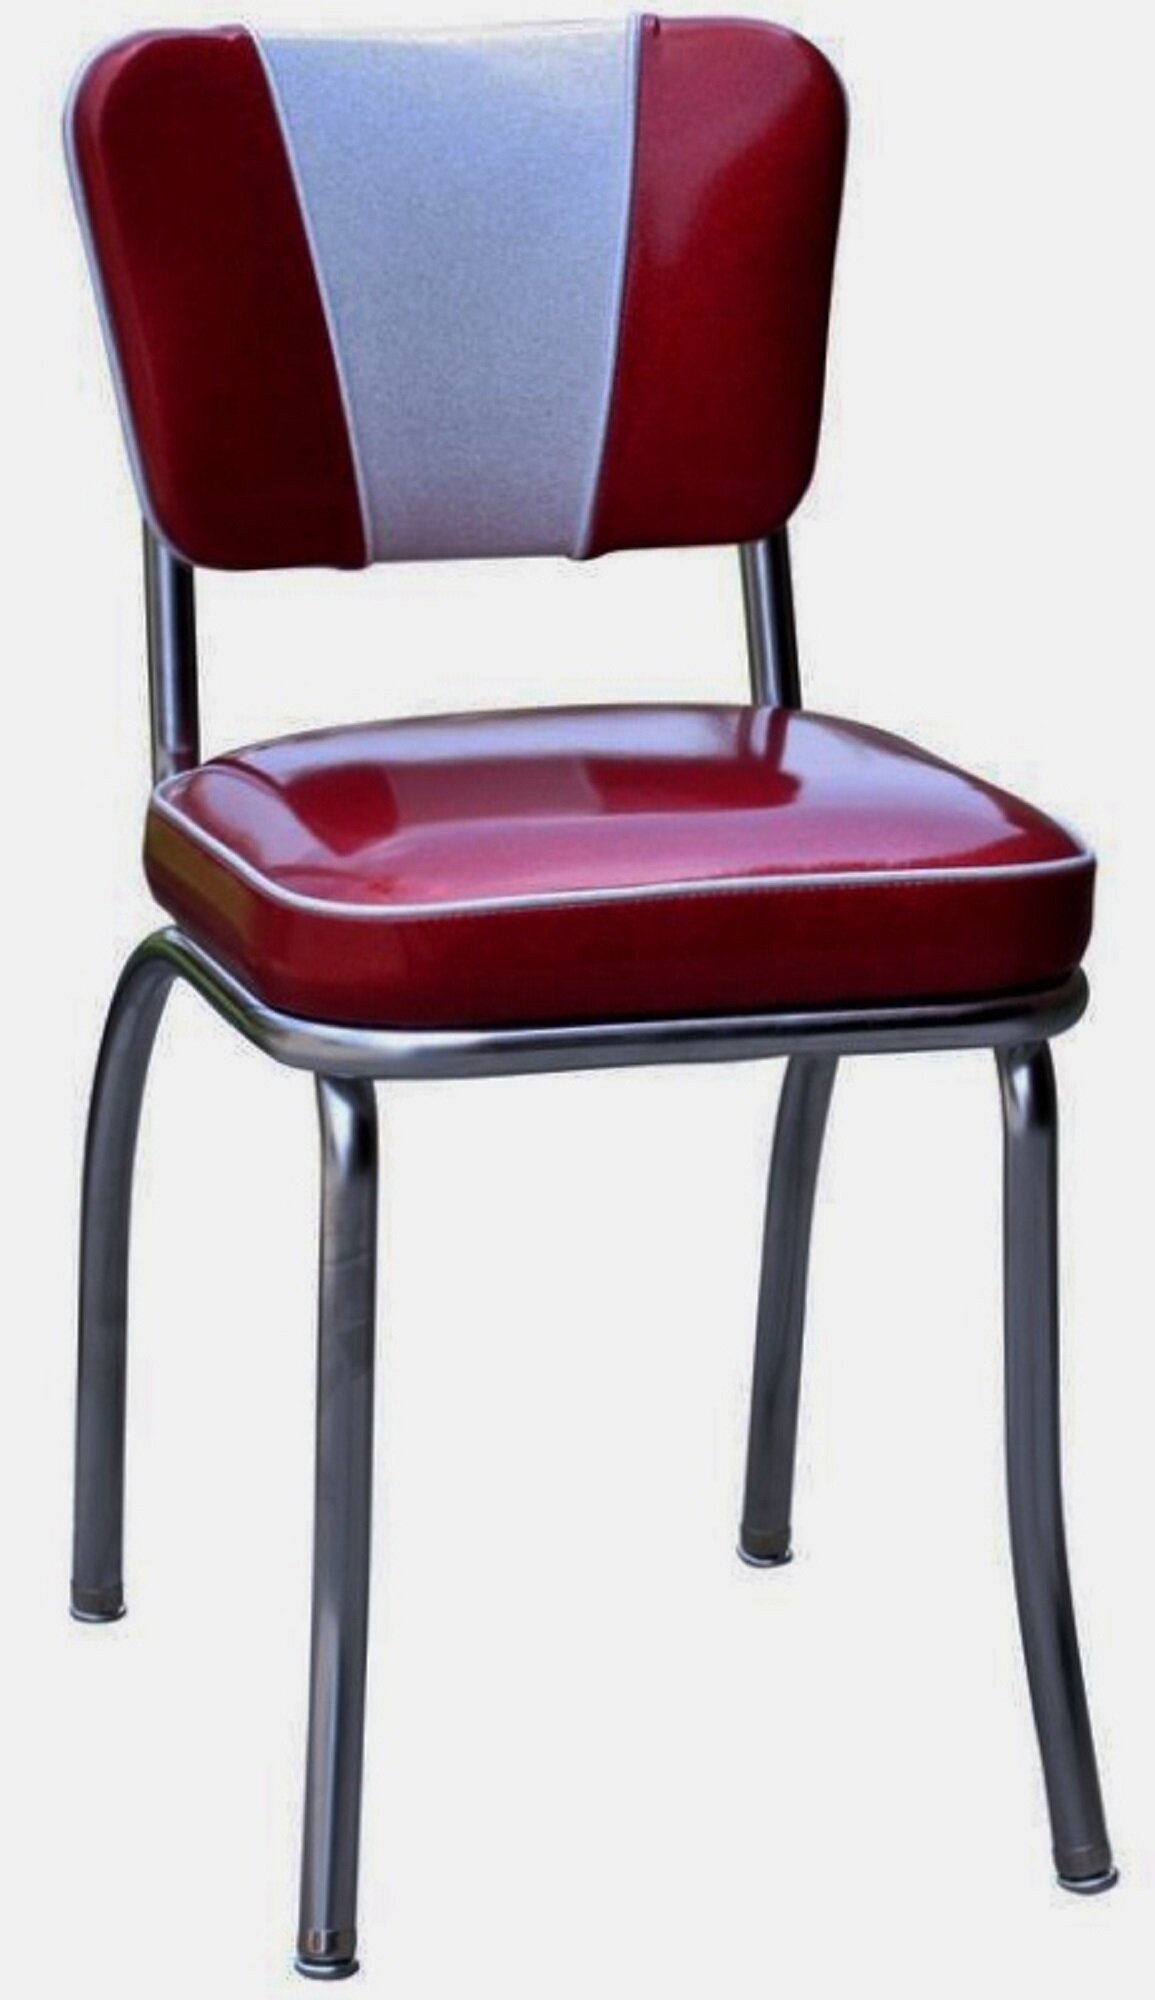 Retro Home Side Chair